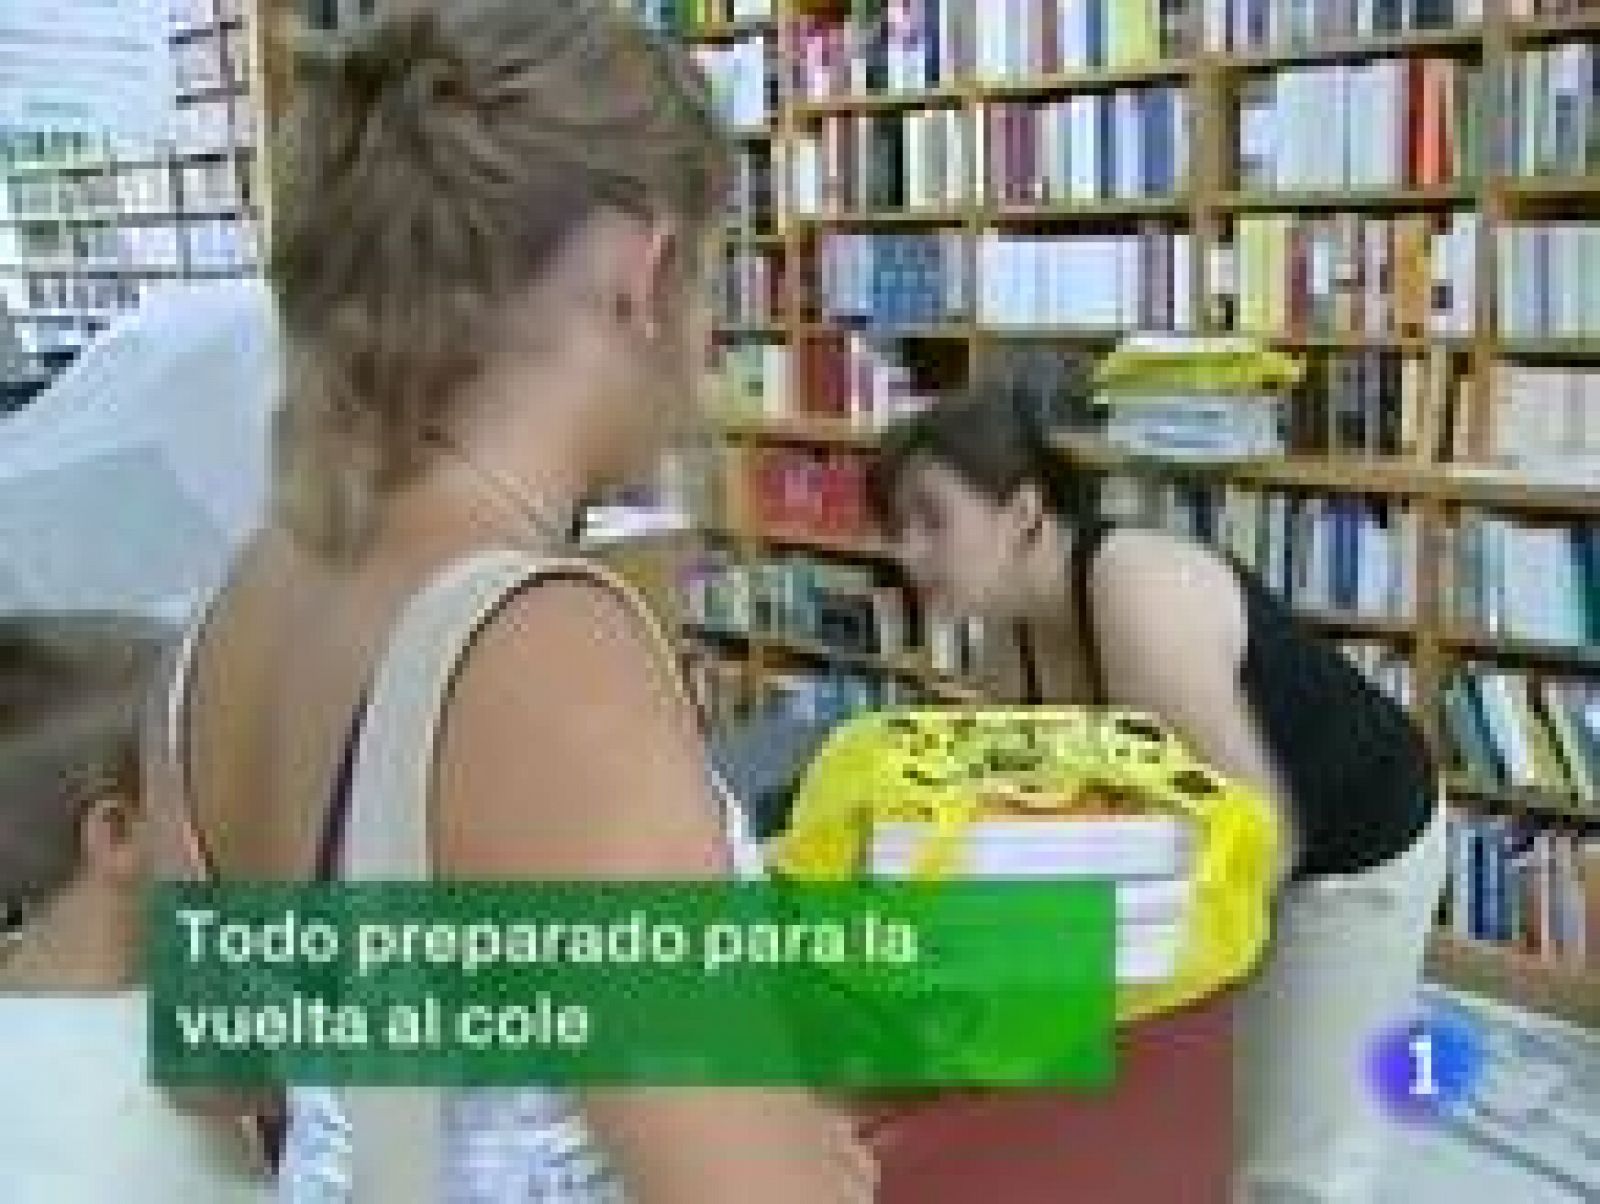 Noticias de Extremadura: Noticias de Extremadura - 03/09/09 | RTVE Play